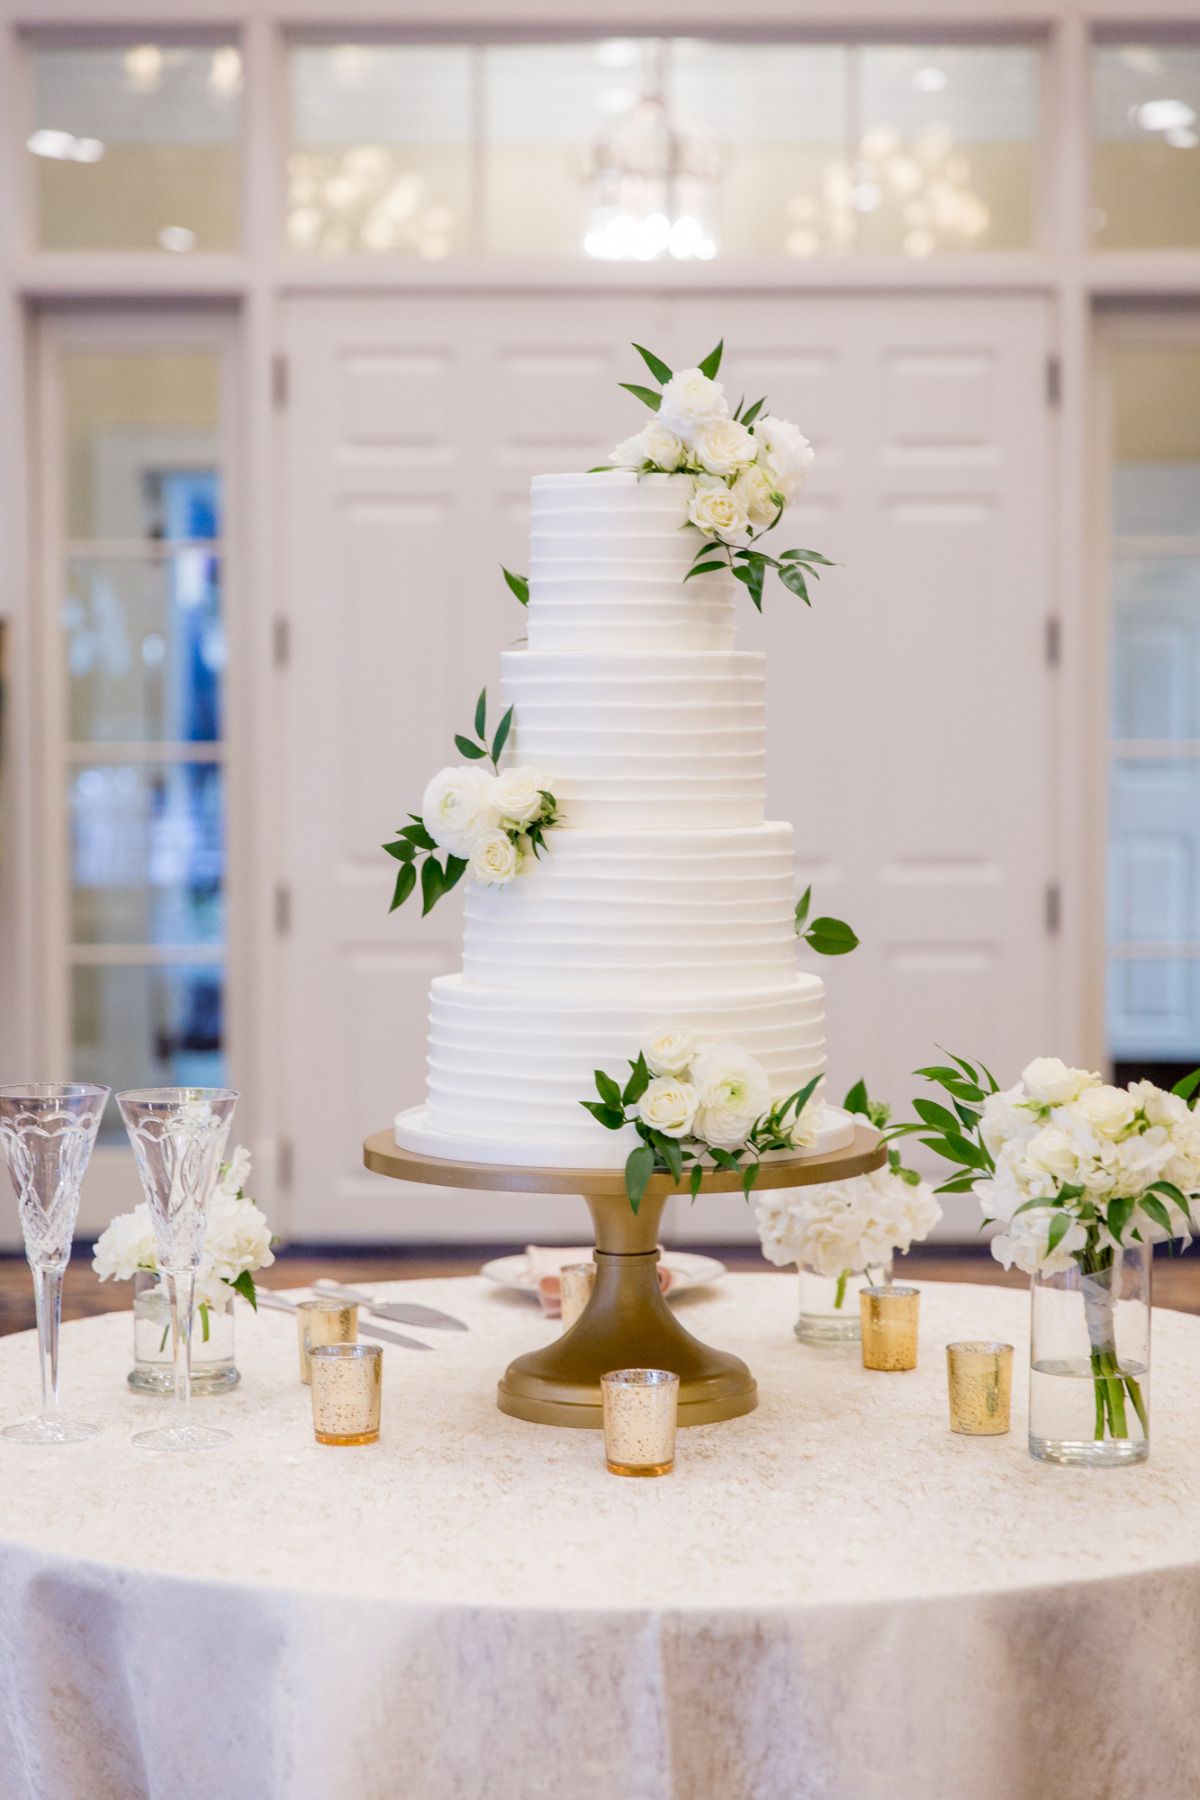 4 tier white wedding cake